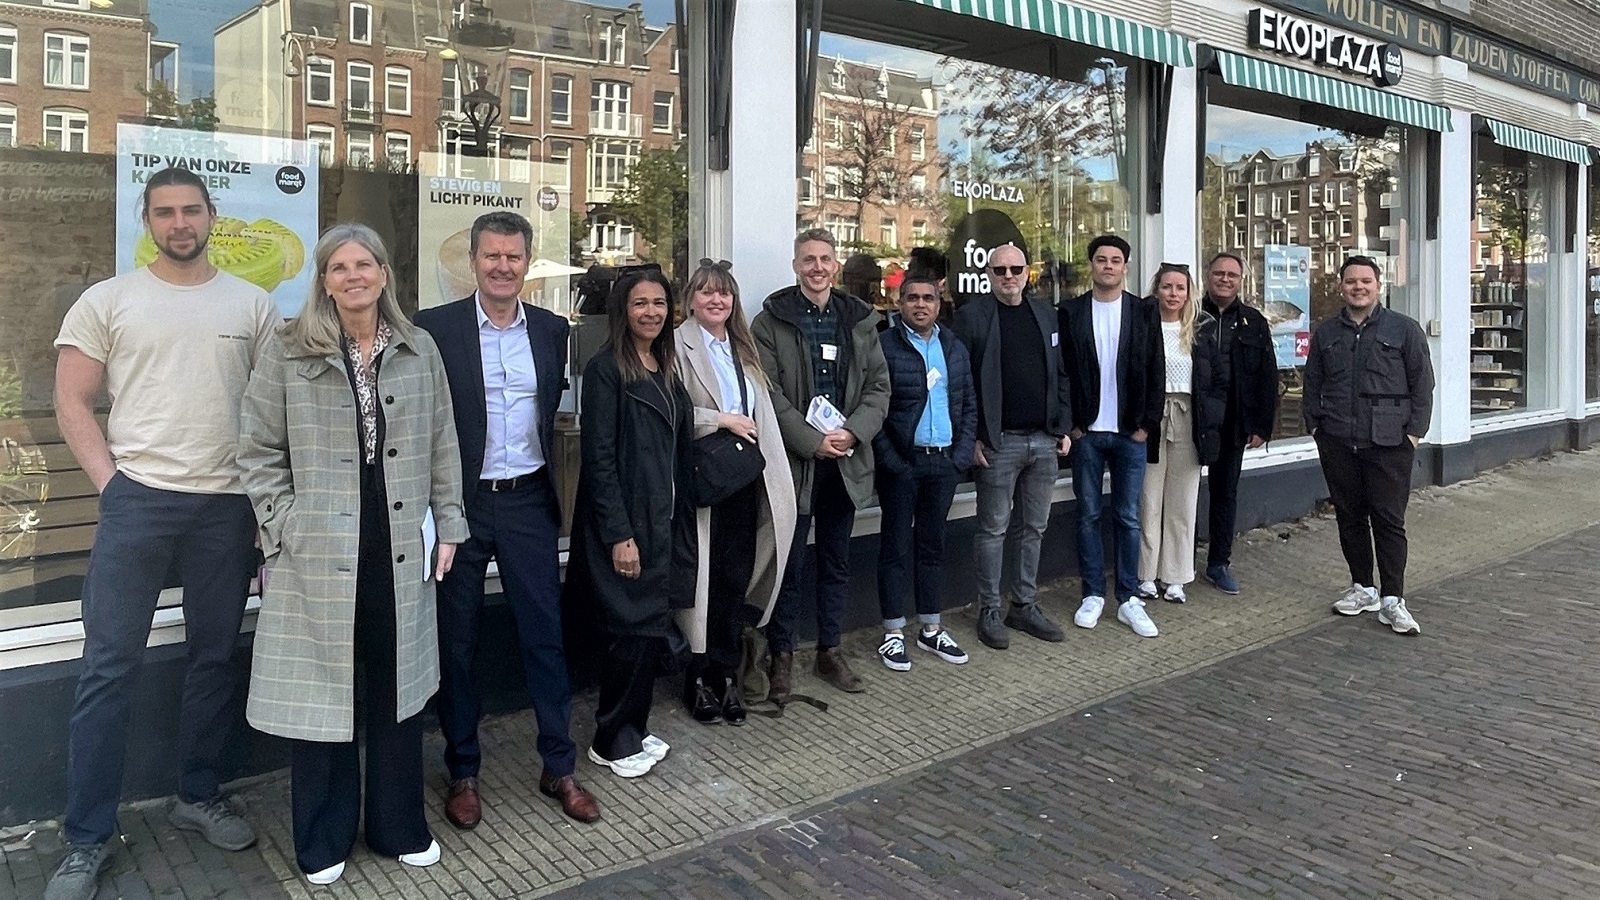 De danske udstillere foran Ekoplaza-butik i Amsterdam